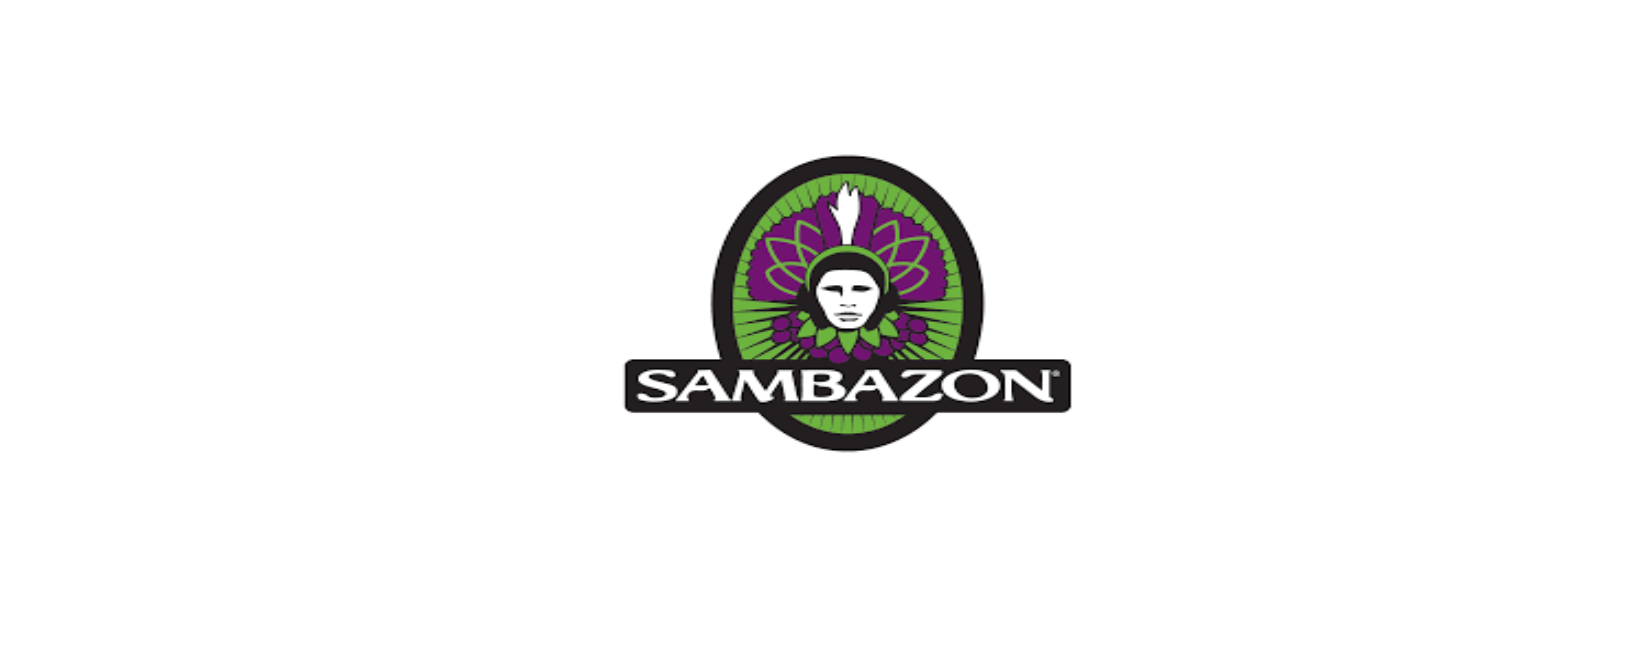 SAMBAZON Discount Code 2023